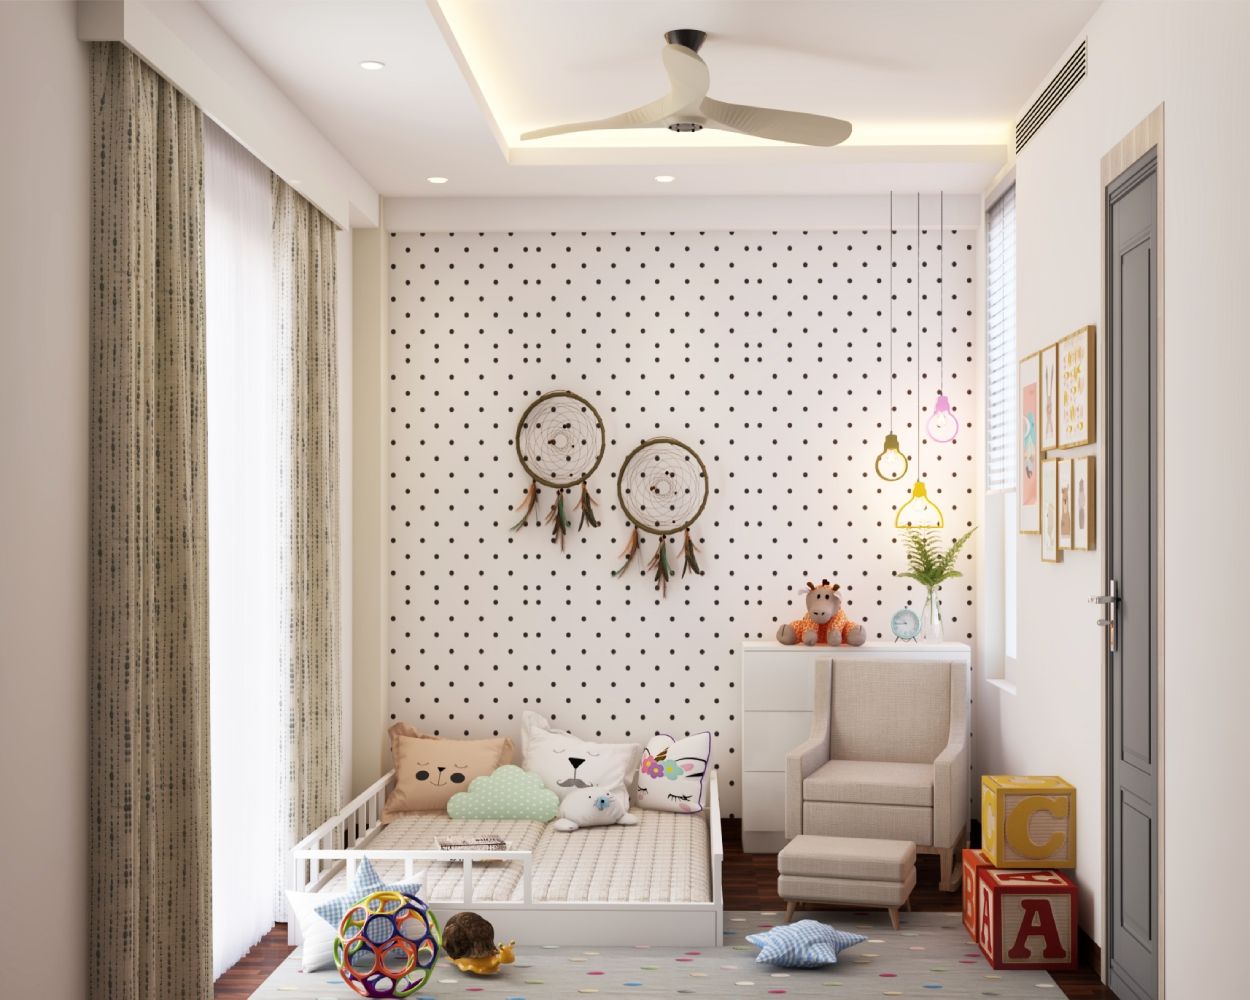 Modern Kids Bedroom Design With Black And White Polka-Dot Wallpaper